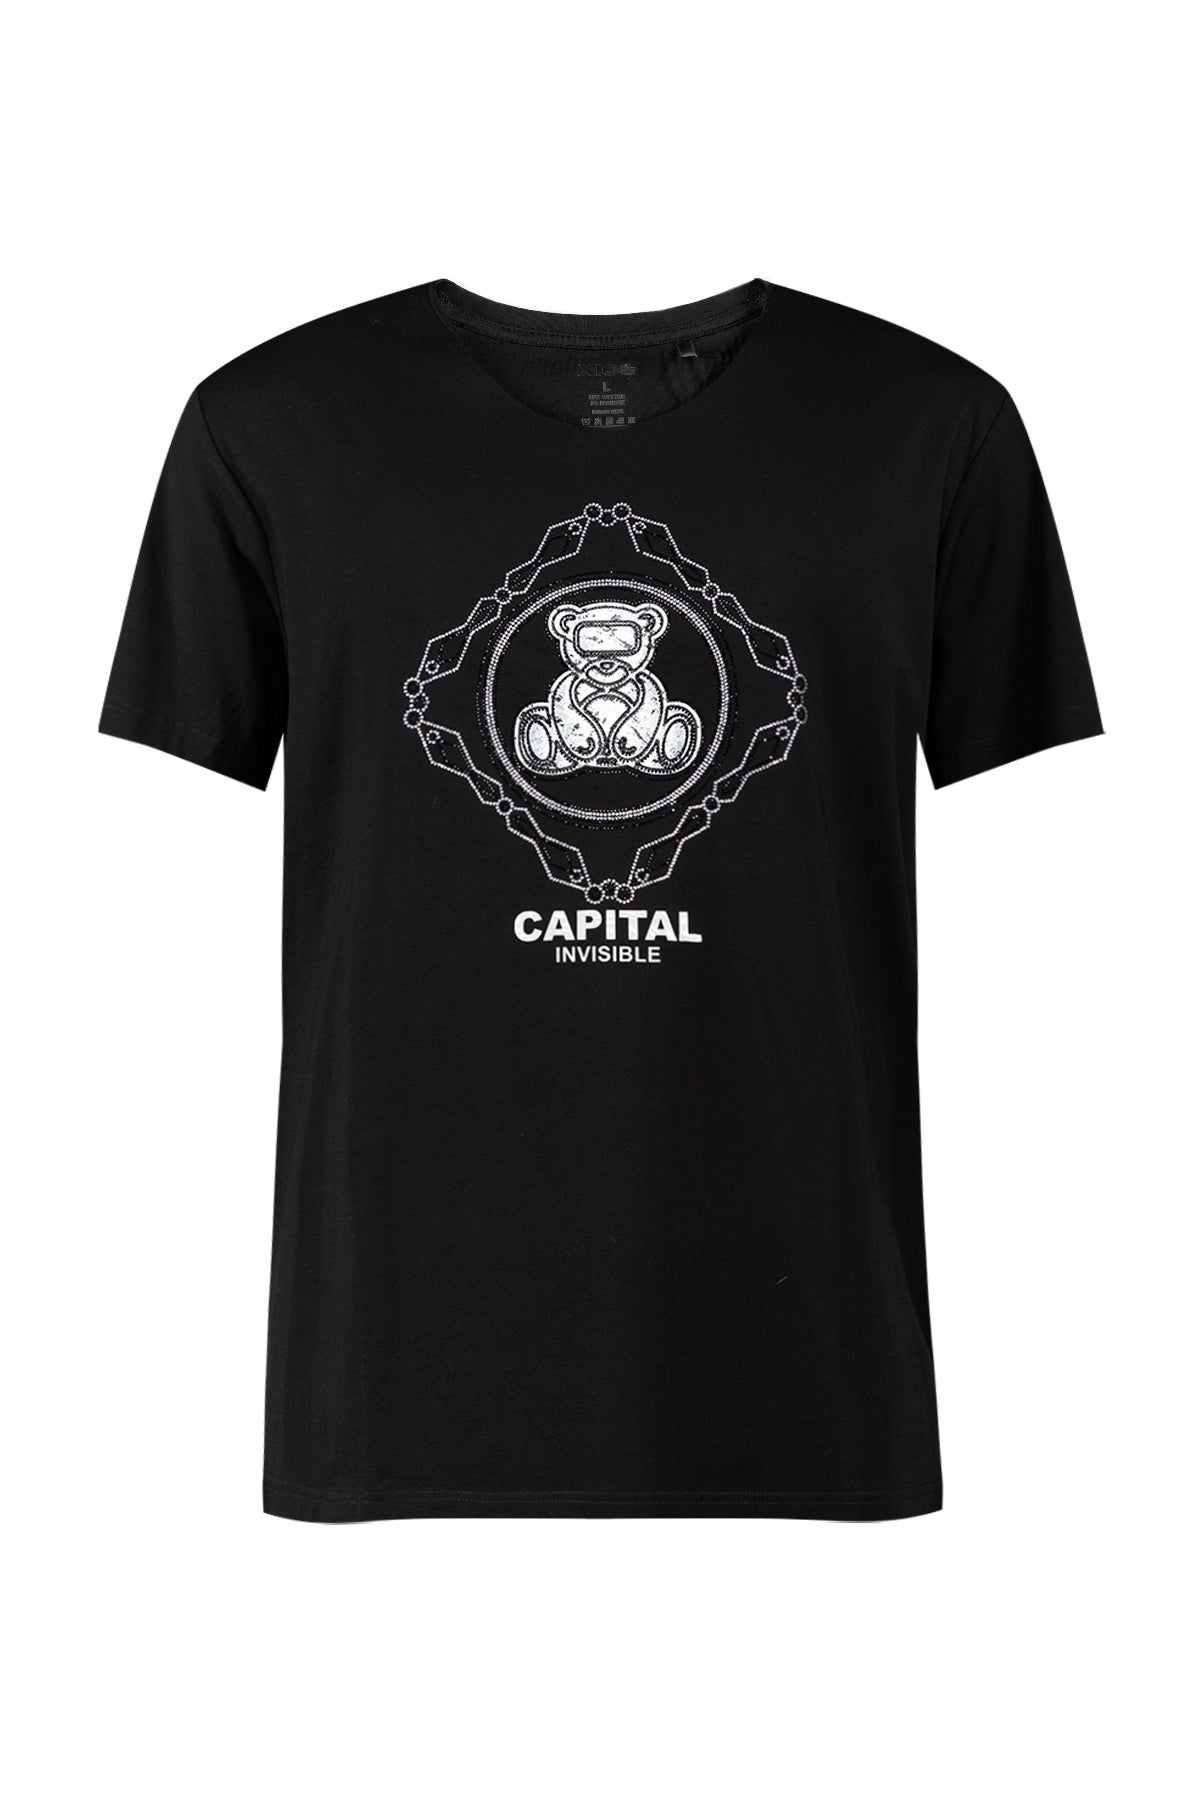 "Capital" Teddy Bear Graphic Tee - XIOS America